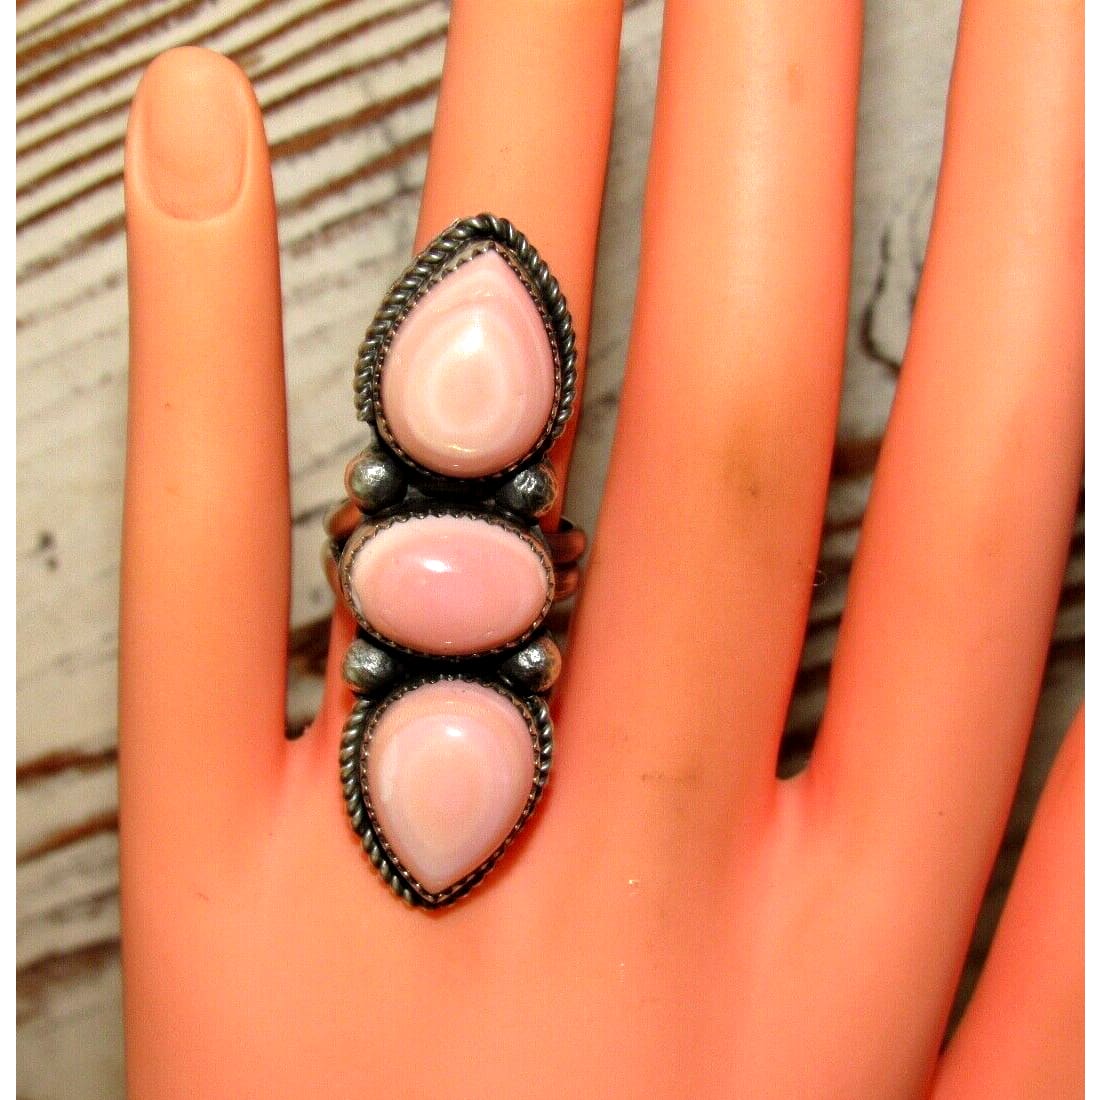 Navajo Pink Conch Cluster Ring Size 7 Adjustable Sterling